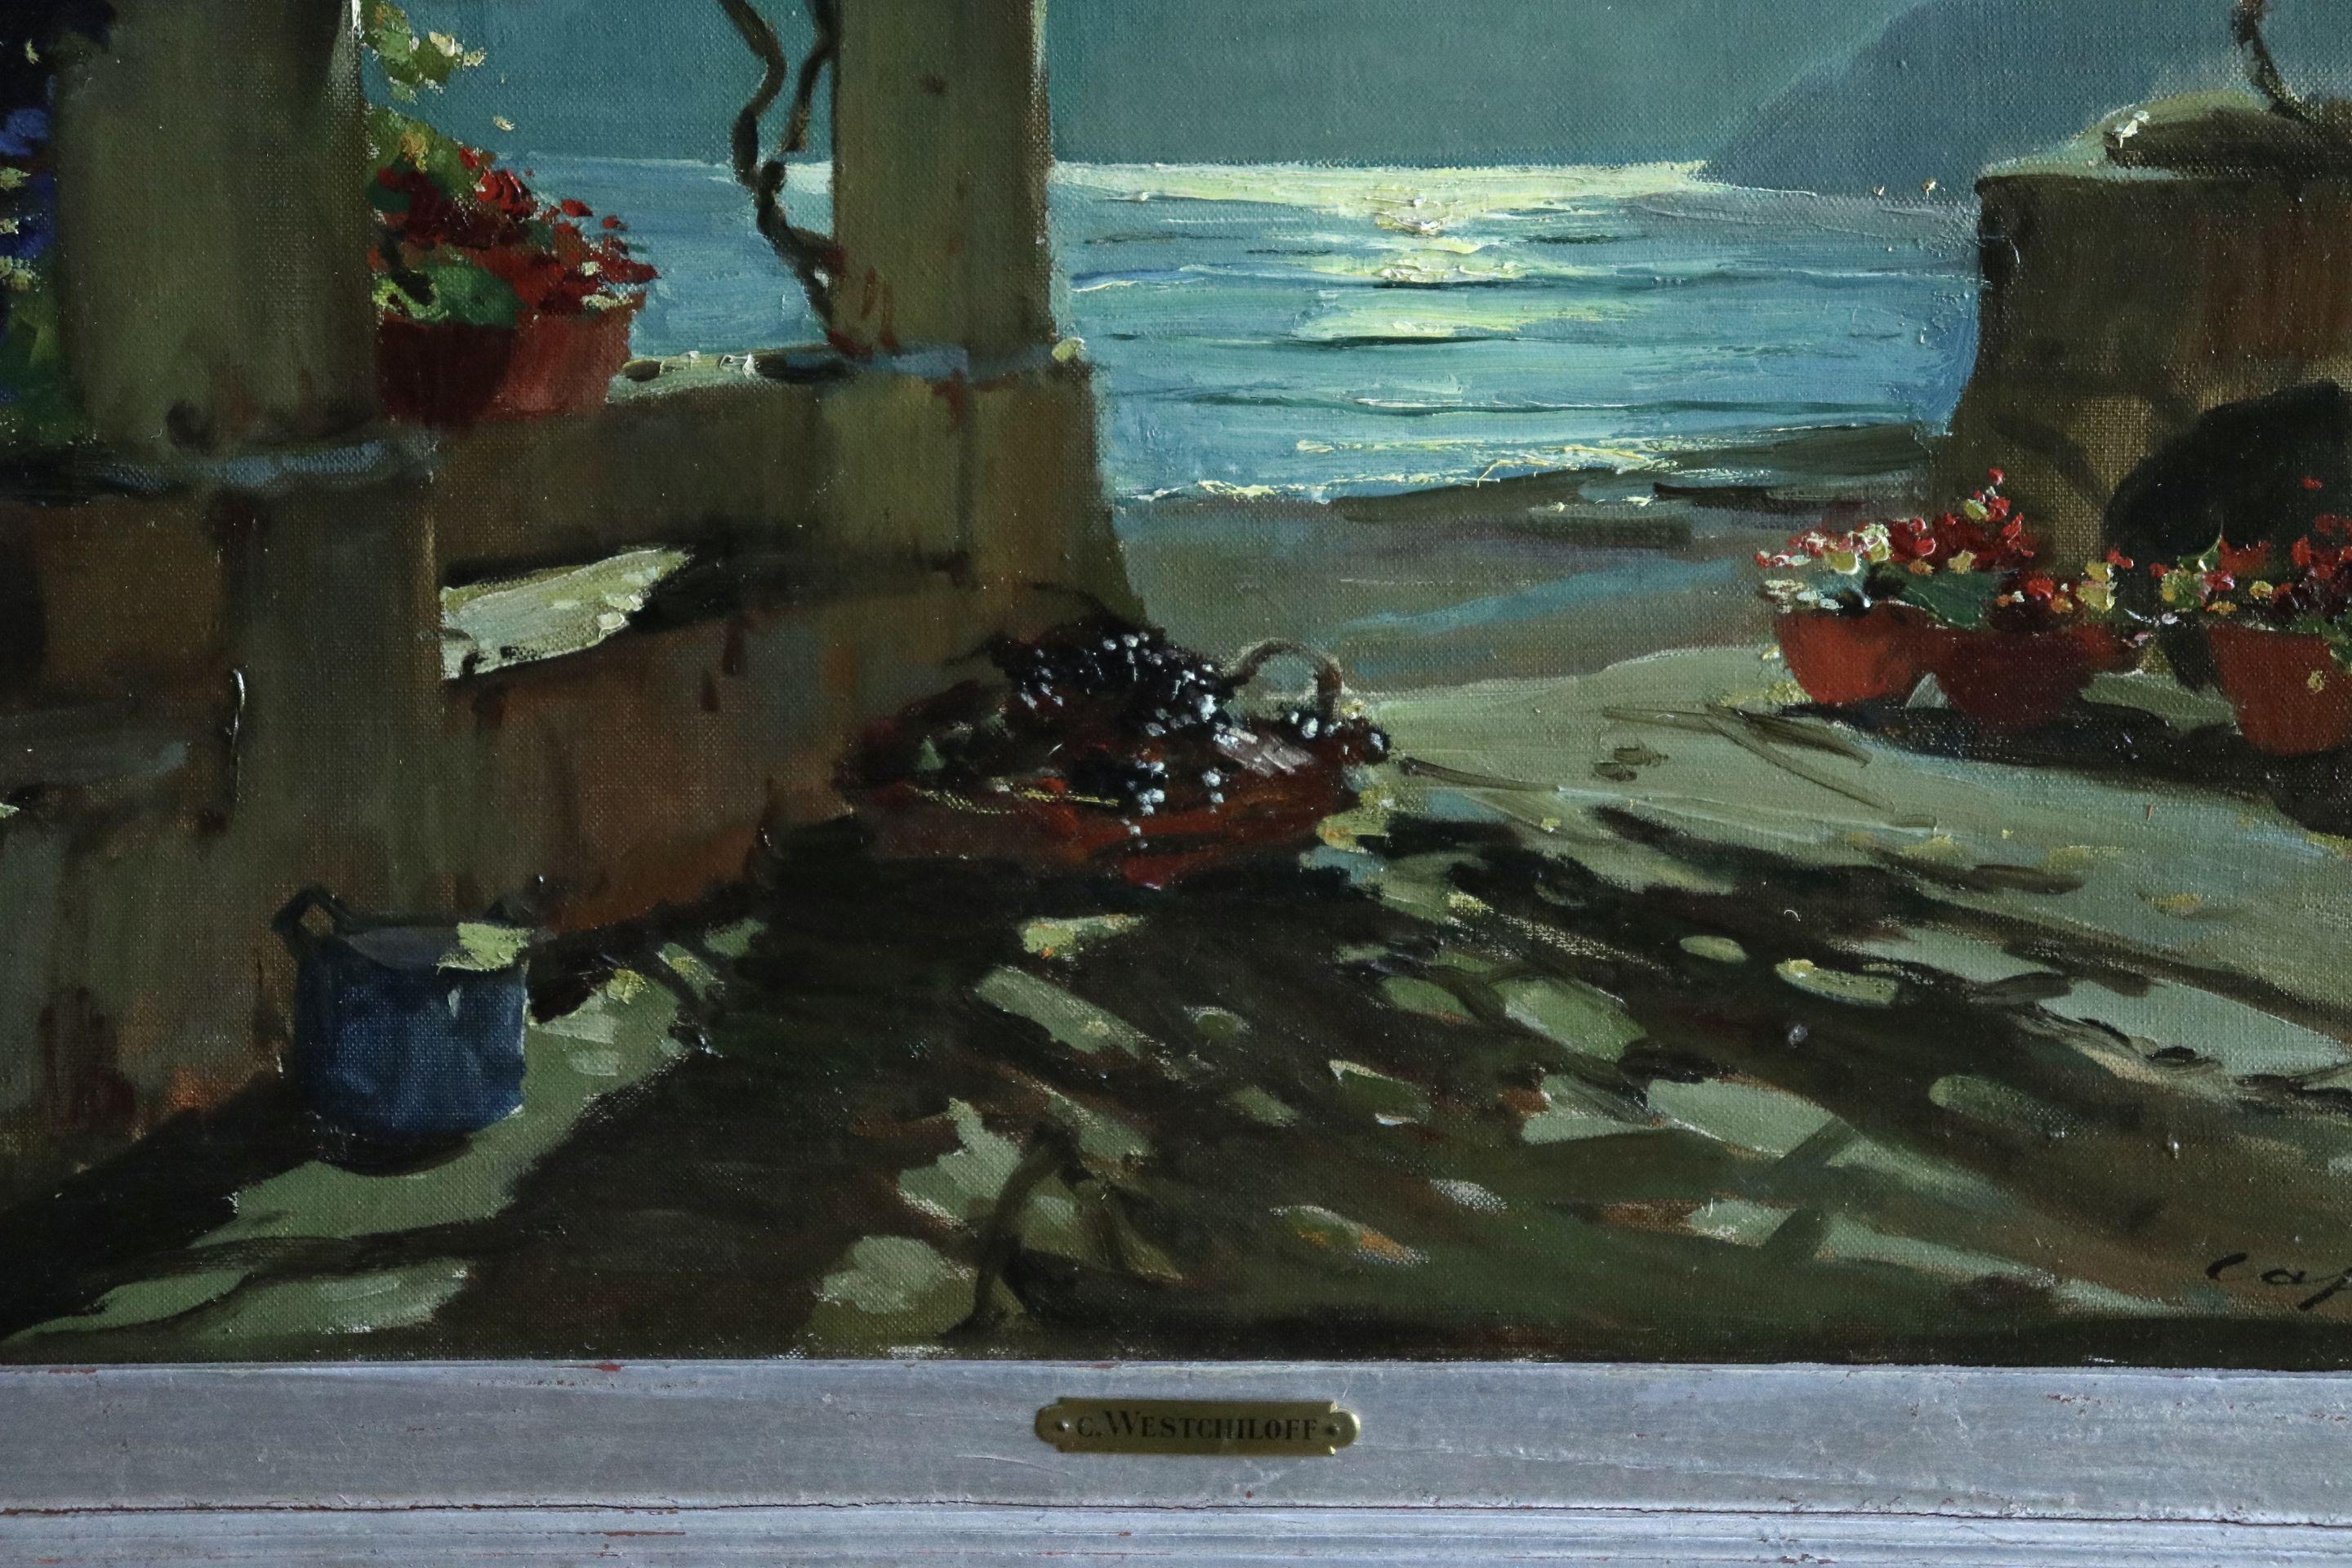 Capri - Moonlight - 20th Century Oil, Sea Landscape at Night by C A Westchiloff - American Impressionist Painting by Constantin Aleksandrovich Westchiloff